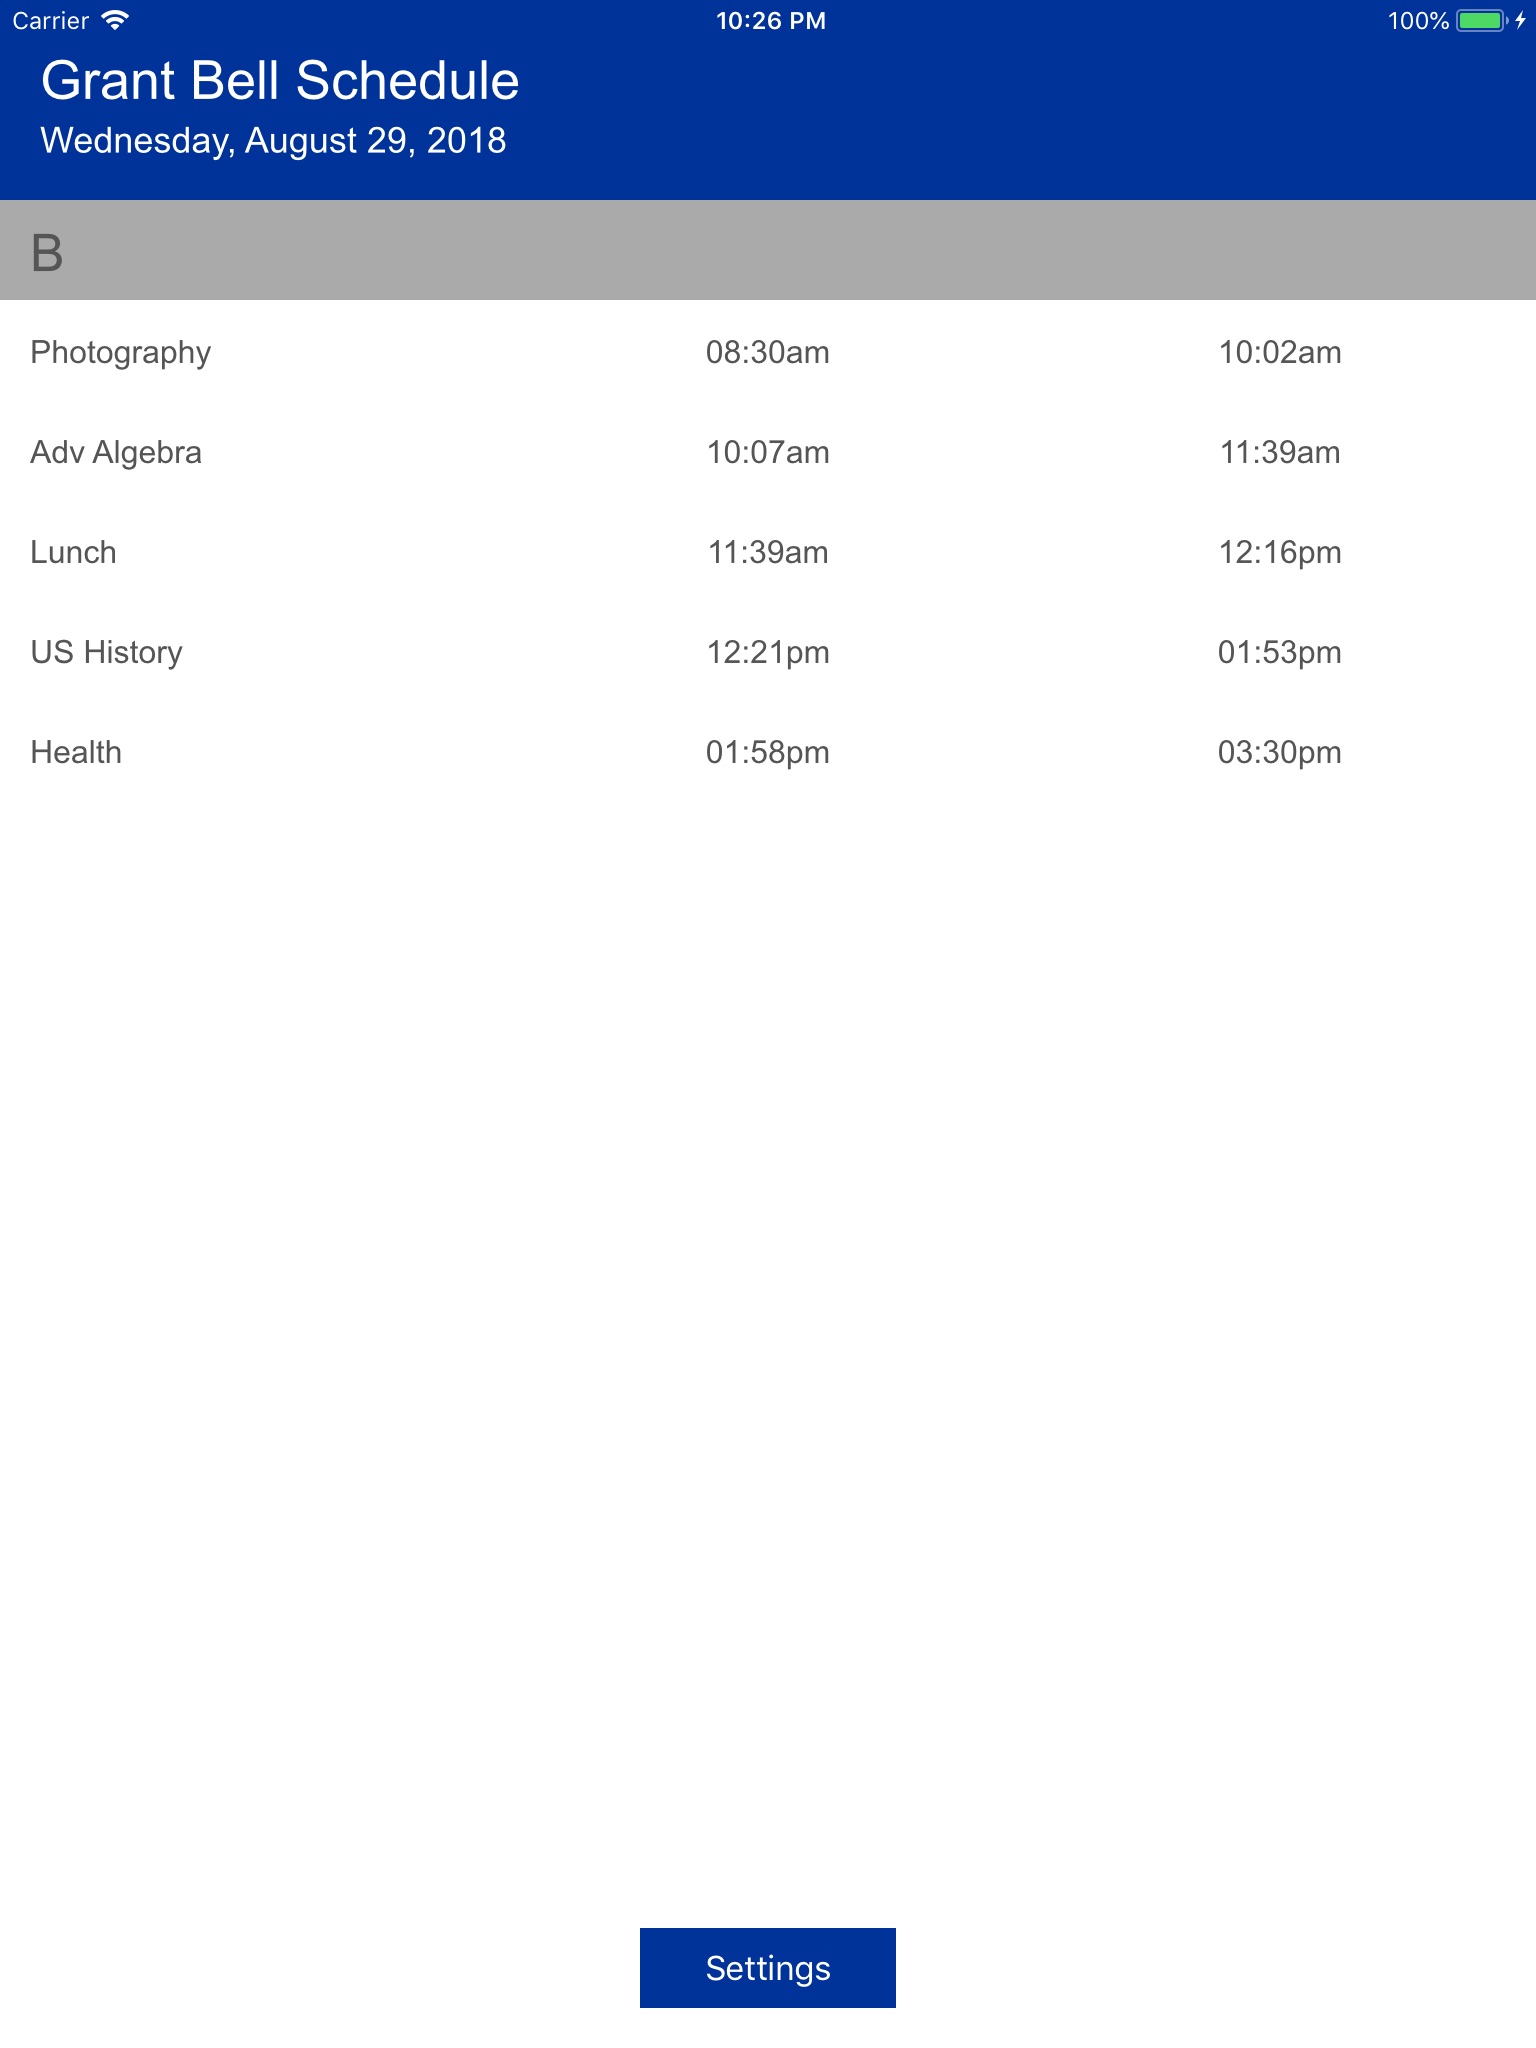 Grant Bell Schedule screenshot 2